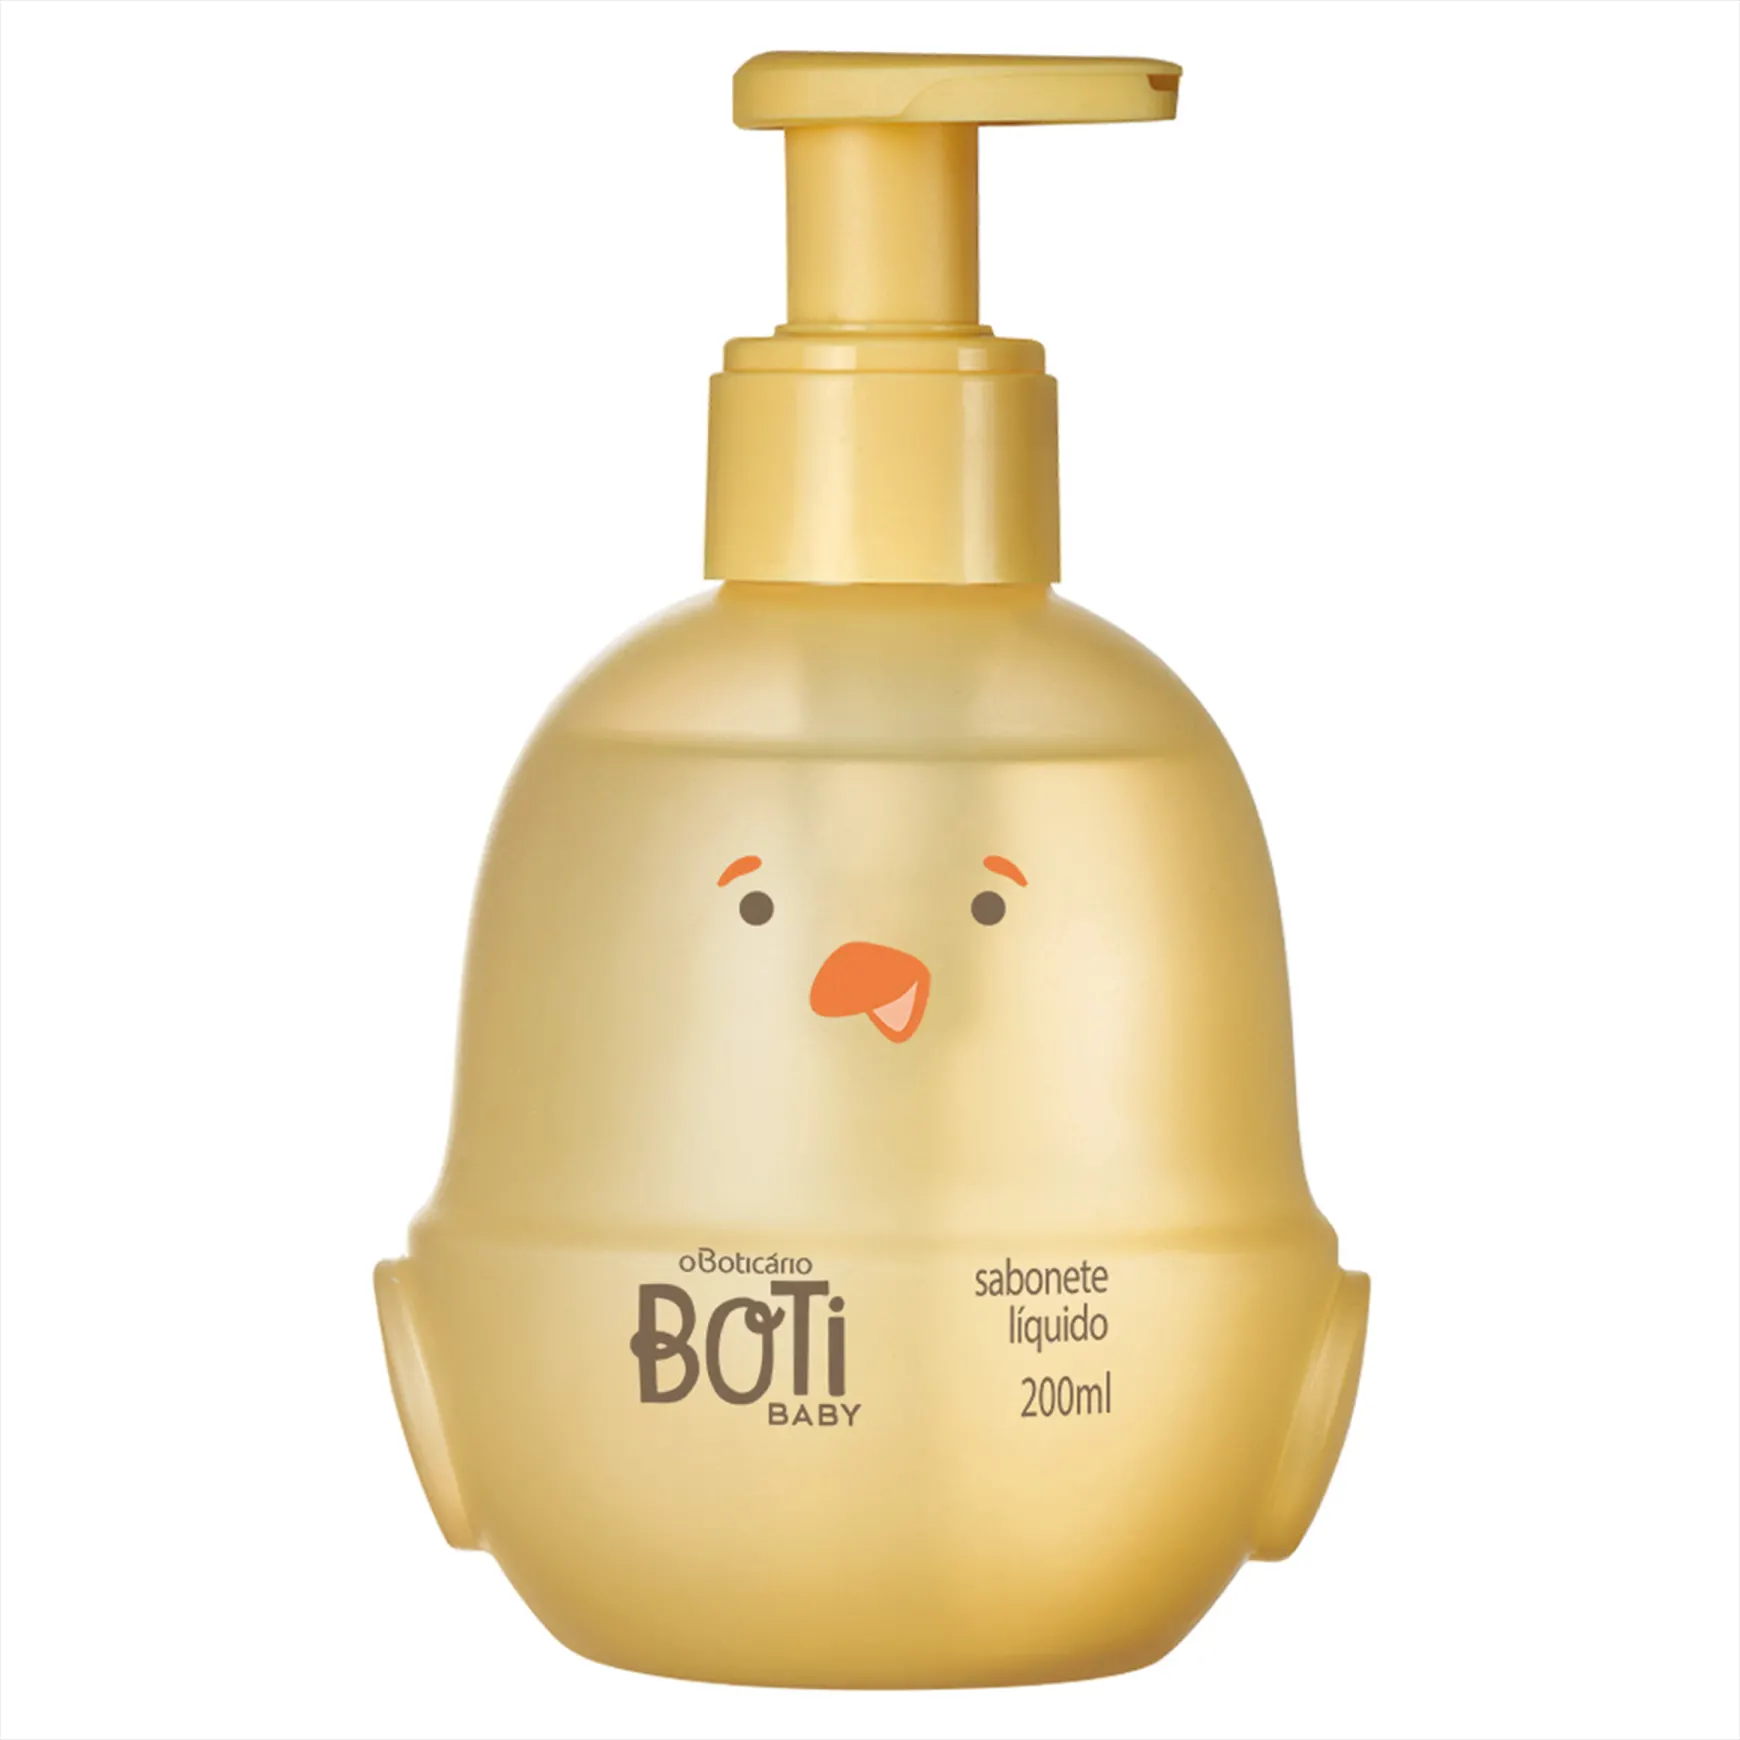 Boti Baby Body and Hair Soap, 200ml